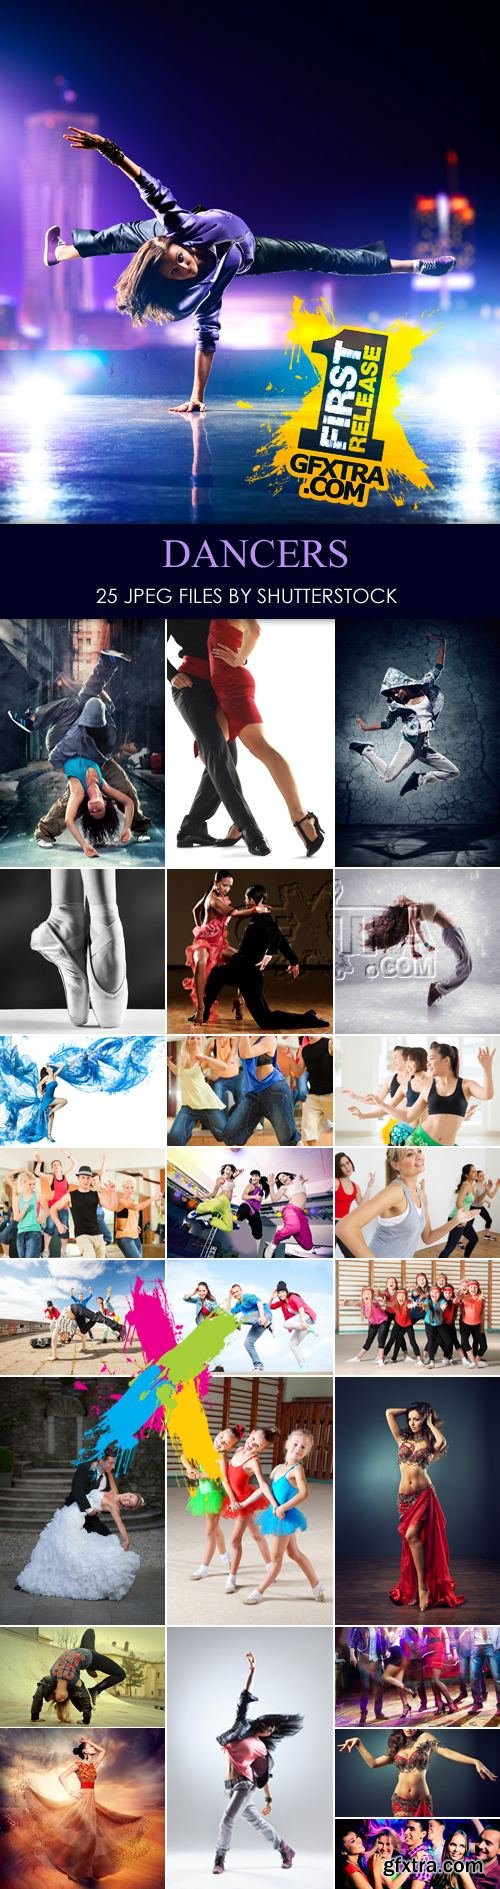 Stock Photo - Dancers 25 JPEG